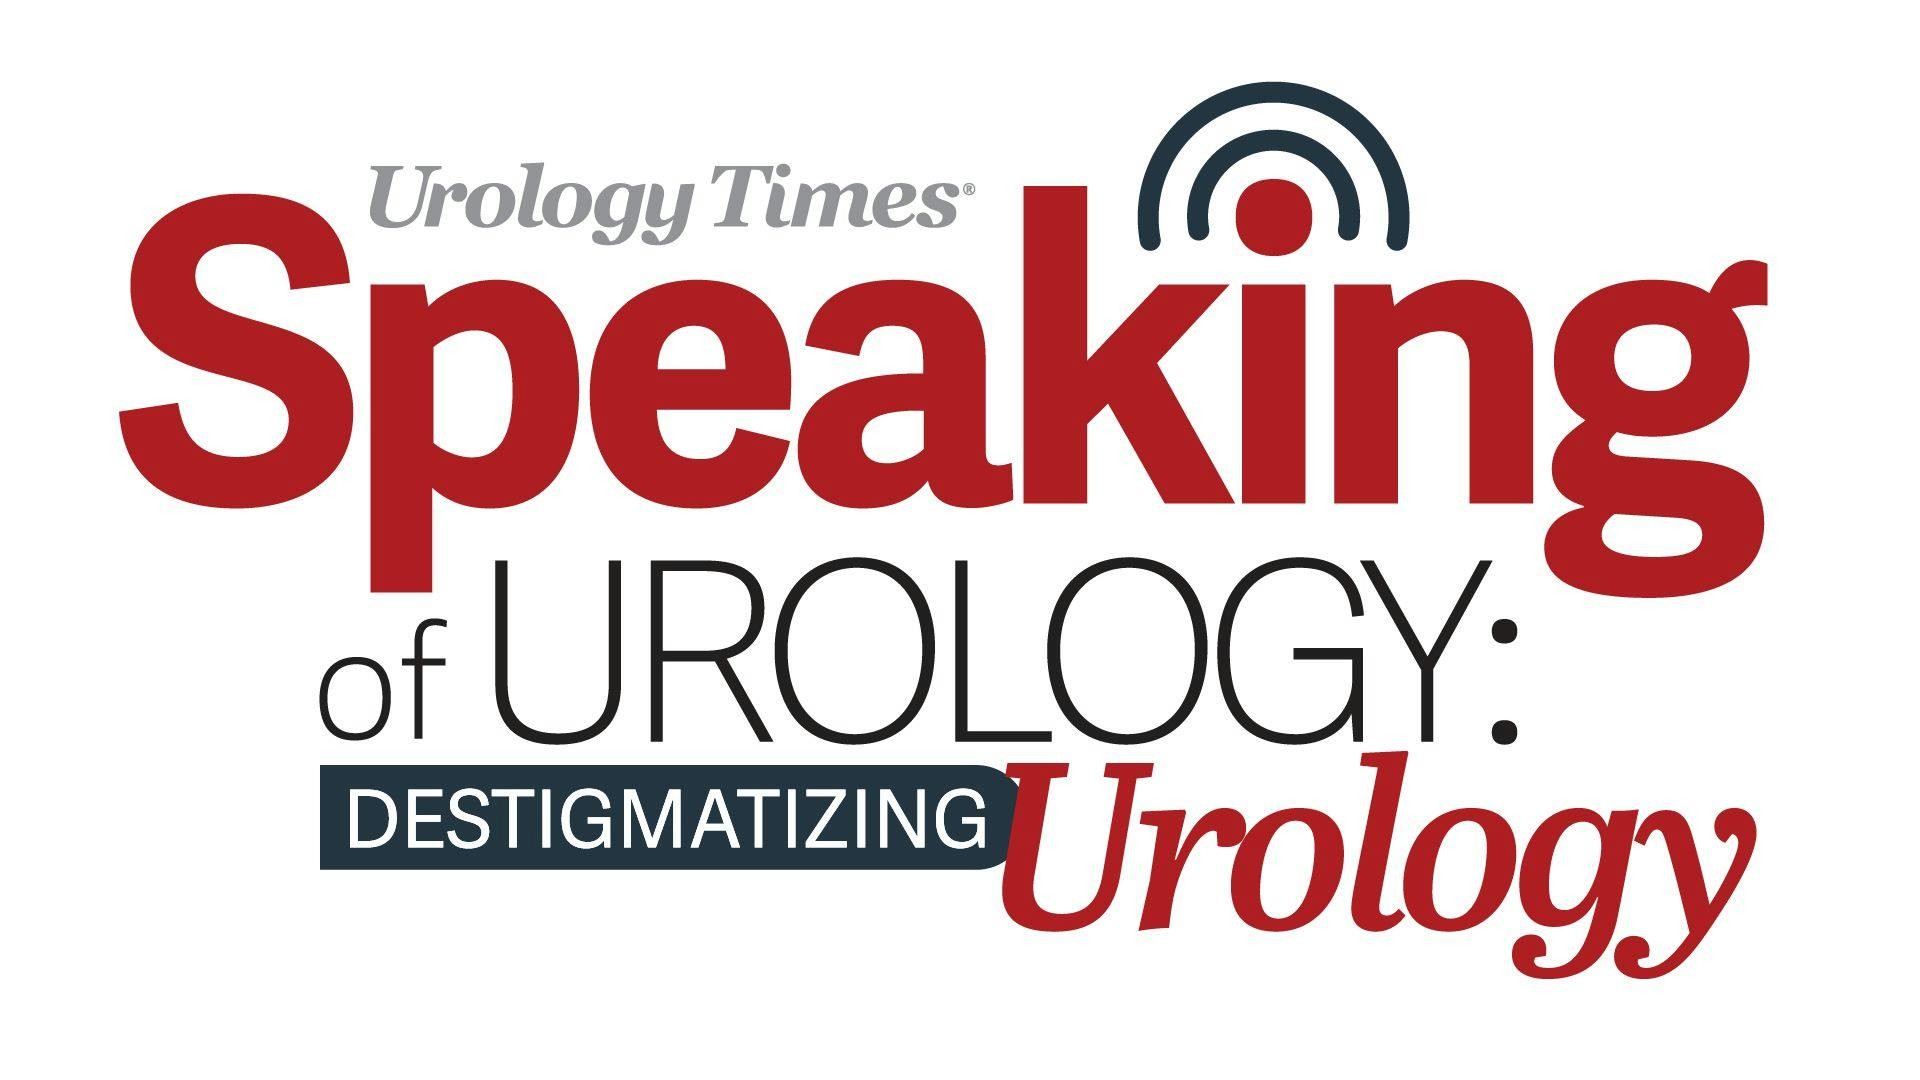 Destigmatizing Urology: Dr. Schlegel discusses male infertility